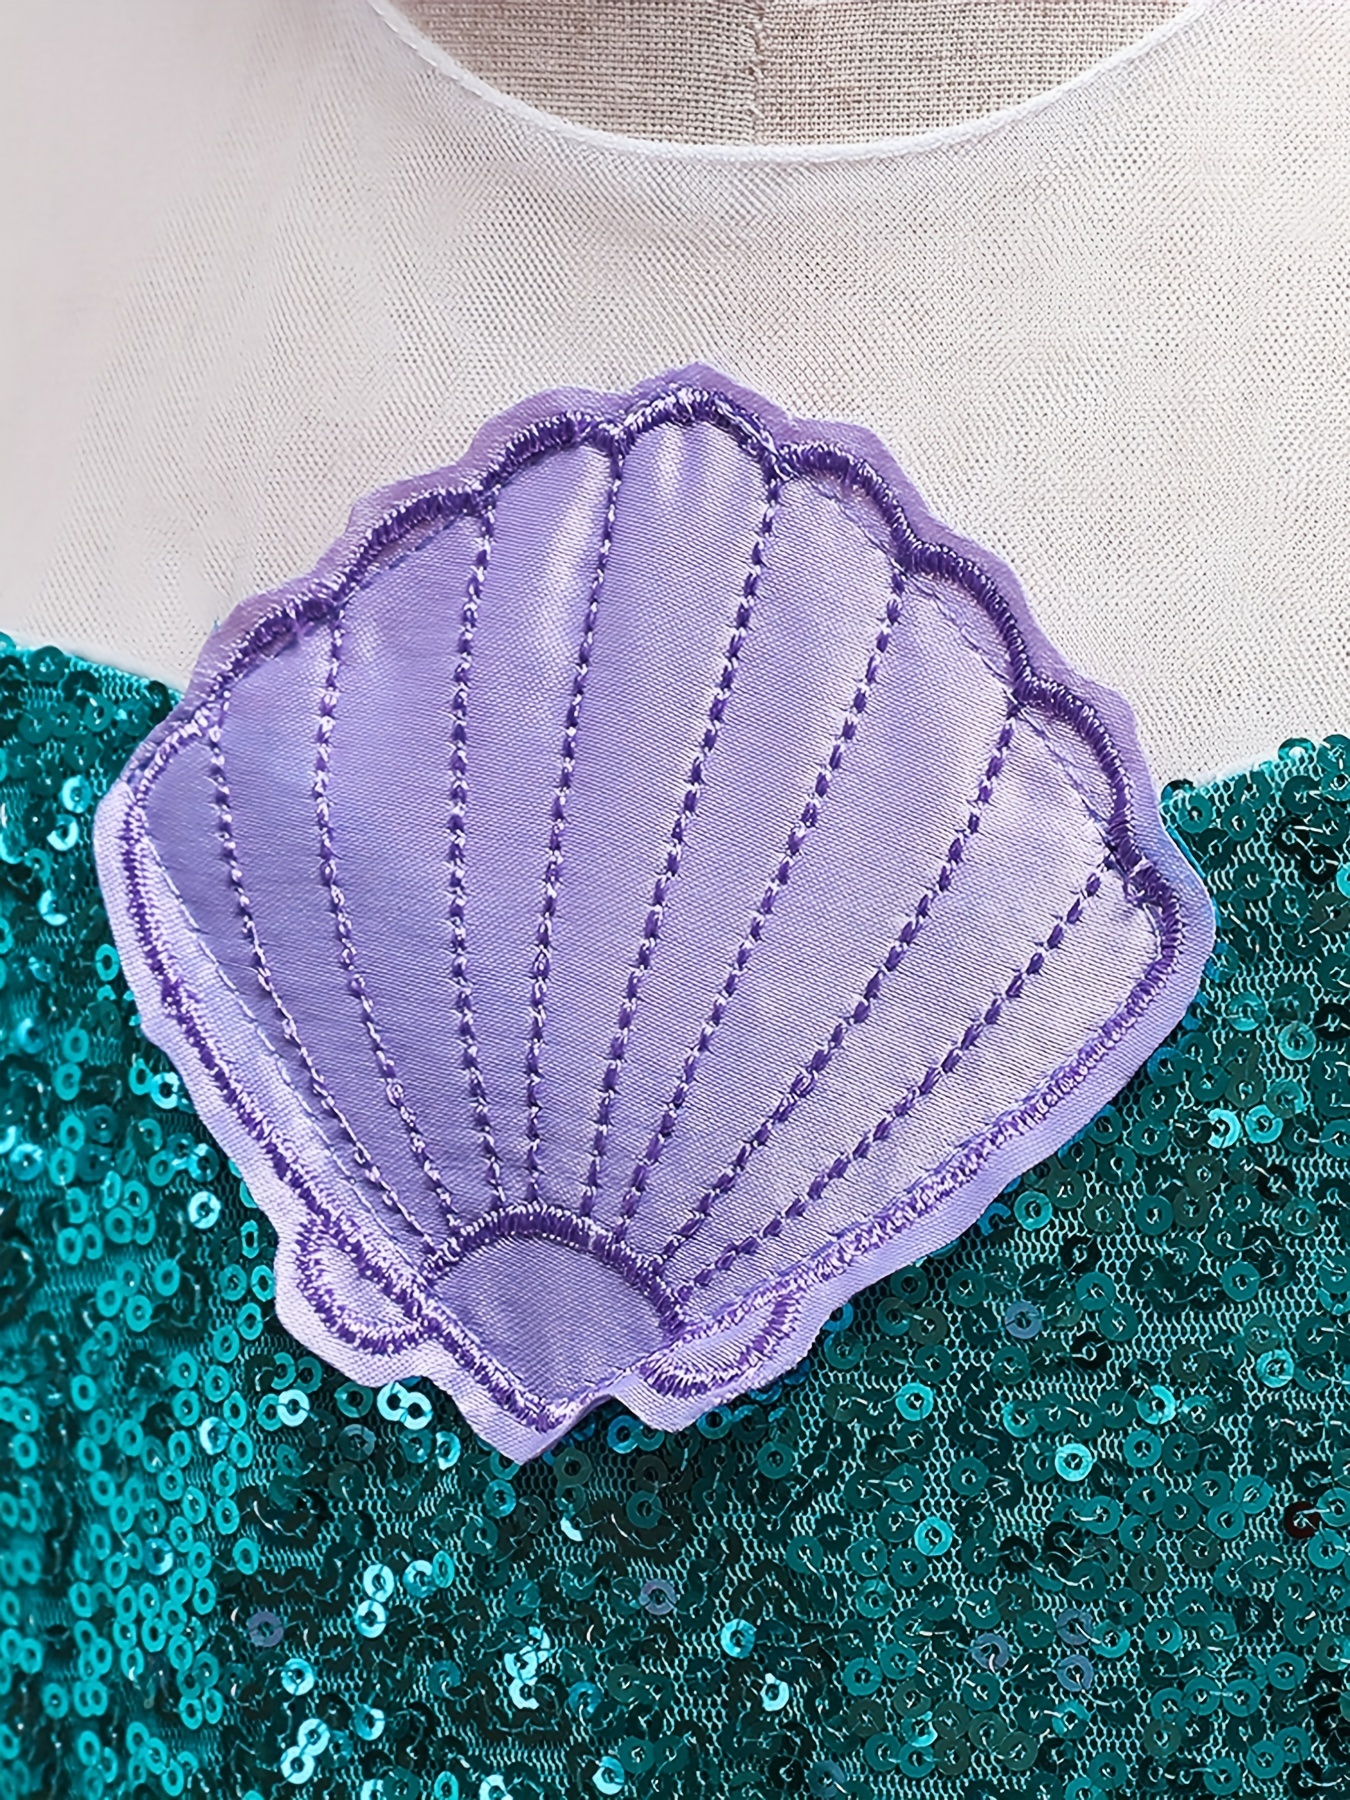 For Little Girls Jewelry Set Blue Purple Mermaid Theme Festive Costume -  AliExpress